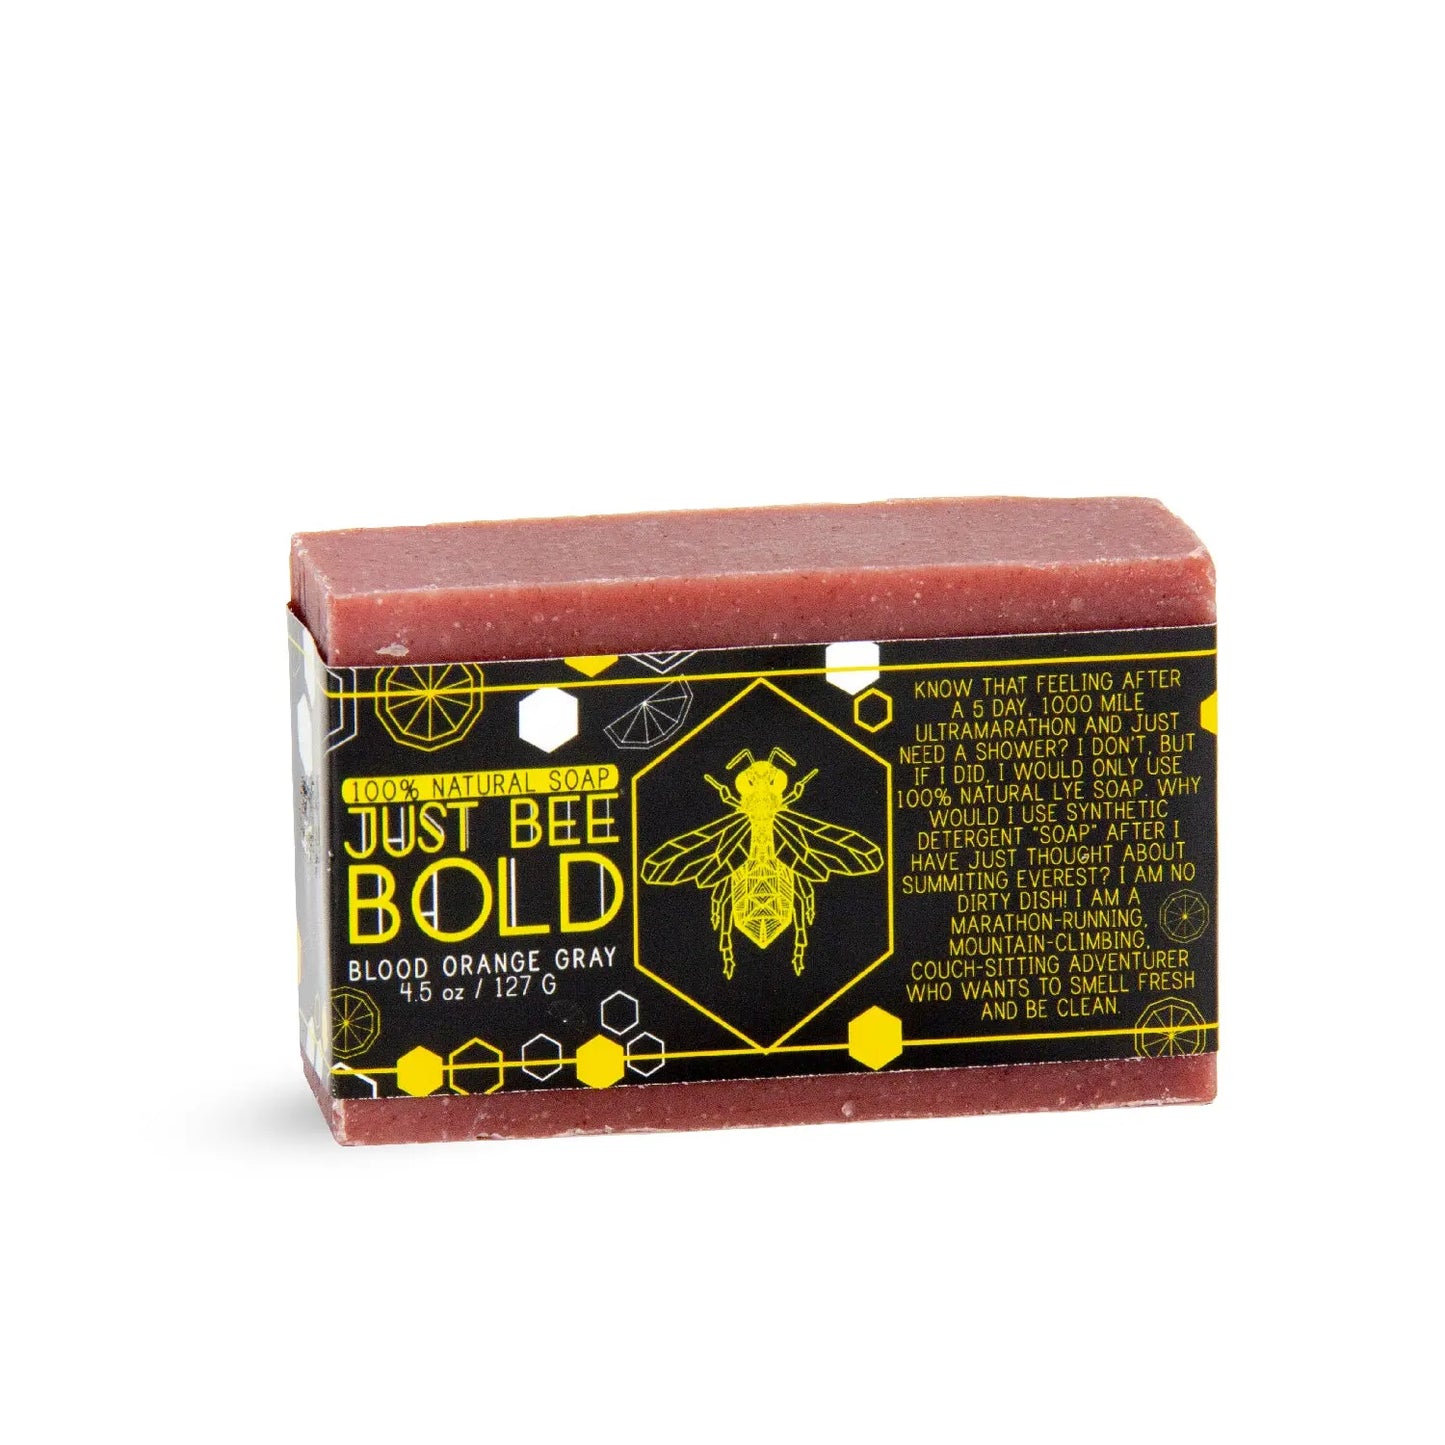 Just Bee Bold Blood Orange Gray  - 100% Natural Organic Bar Soap